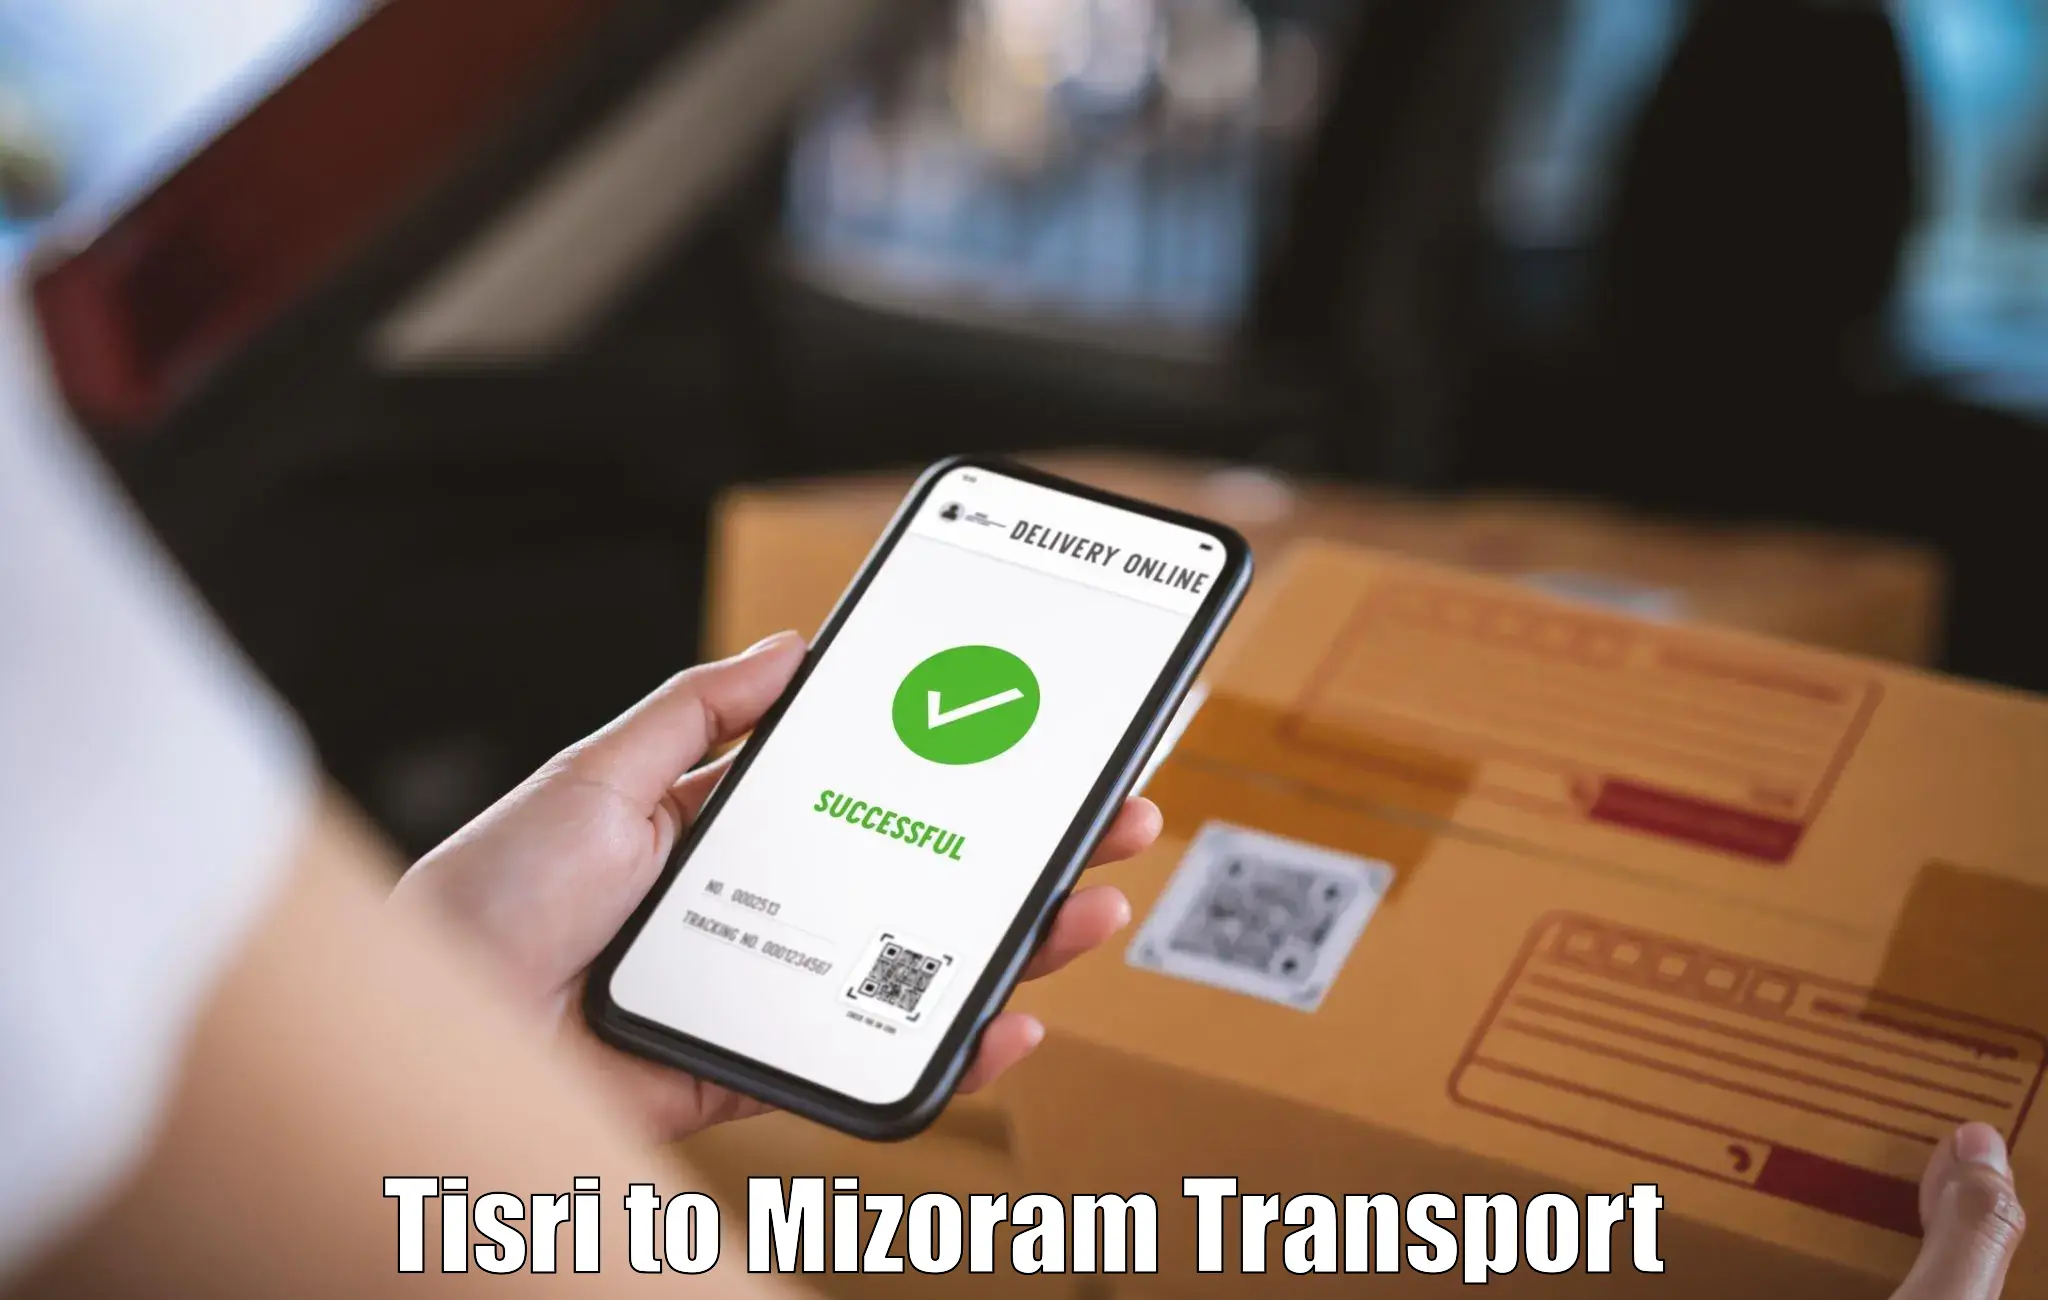 Cycle transportation service Tisri to Mizoram